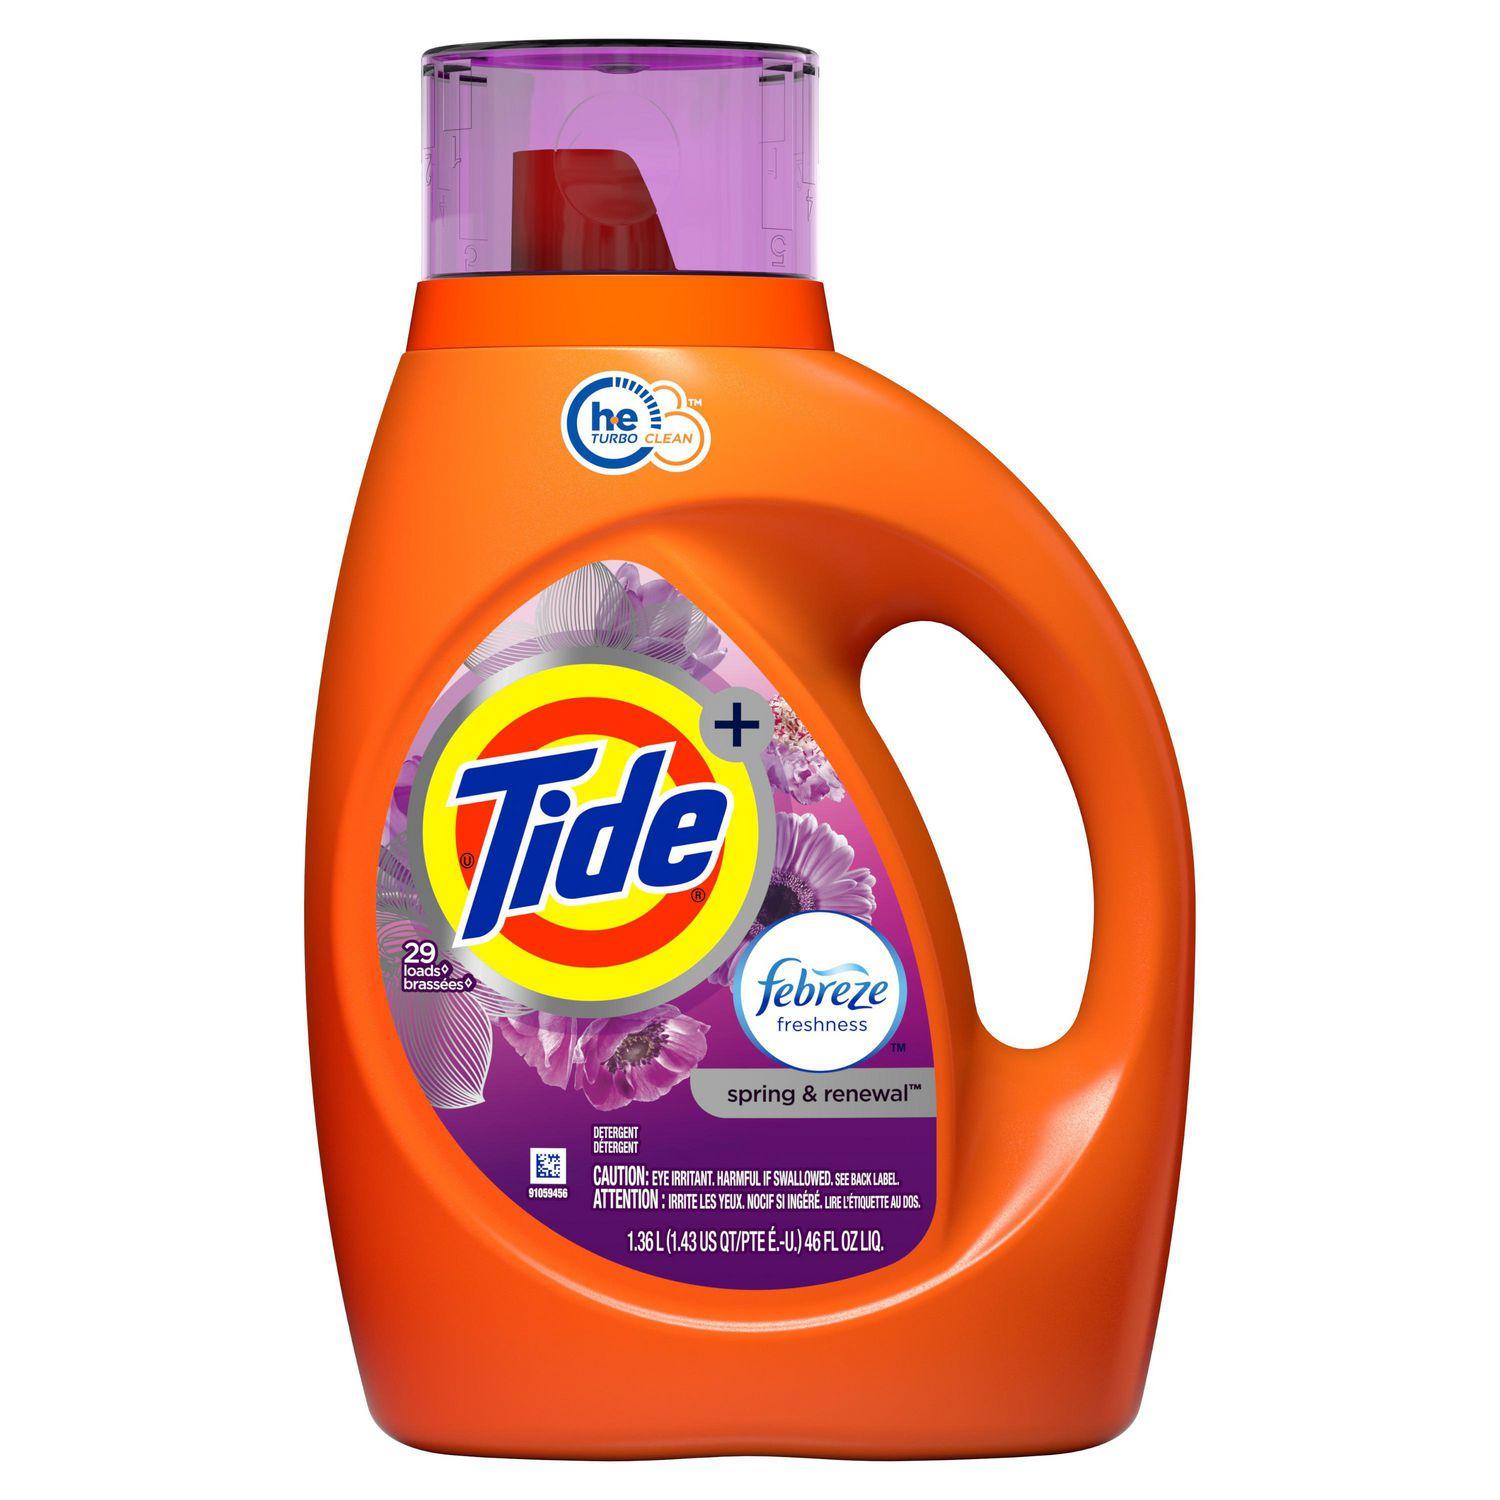 Tide Plus Febreze Freshness He Turbo Clean Liquid Laundry Detergent